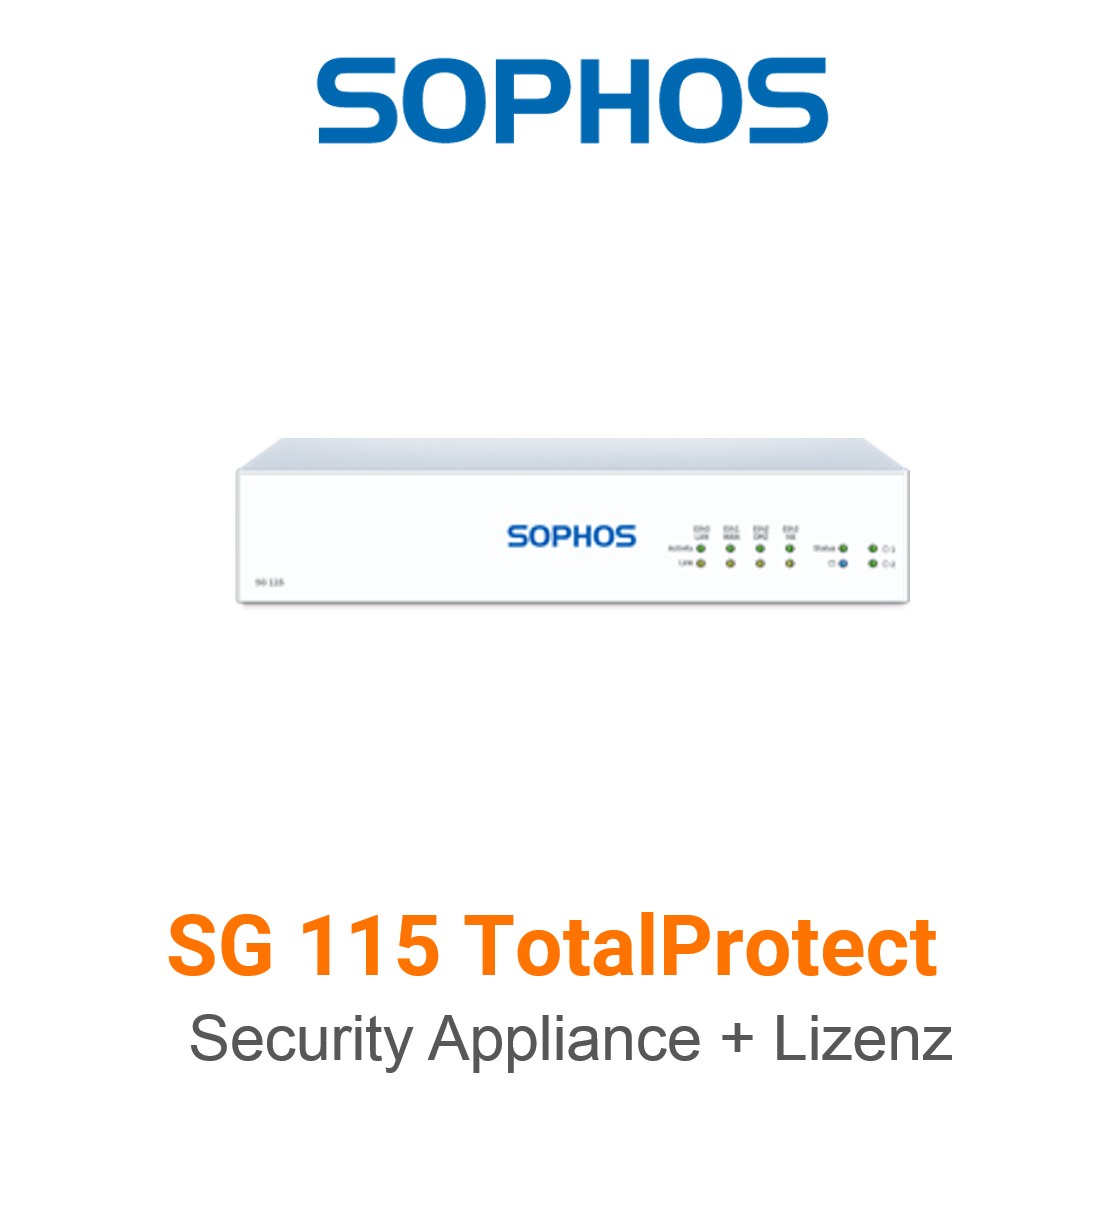 Sophos SG 115 TotalProtect Bundle (Hardware + Lizenz)